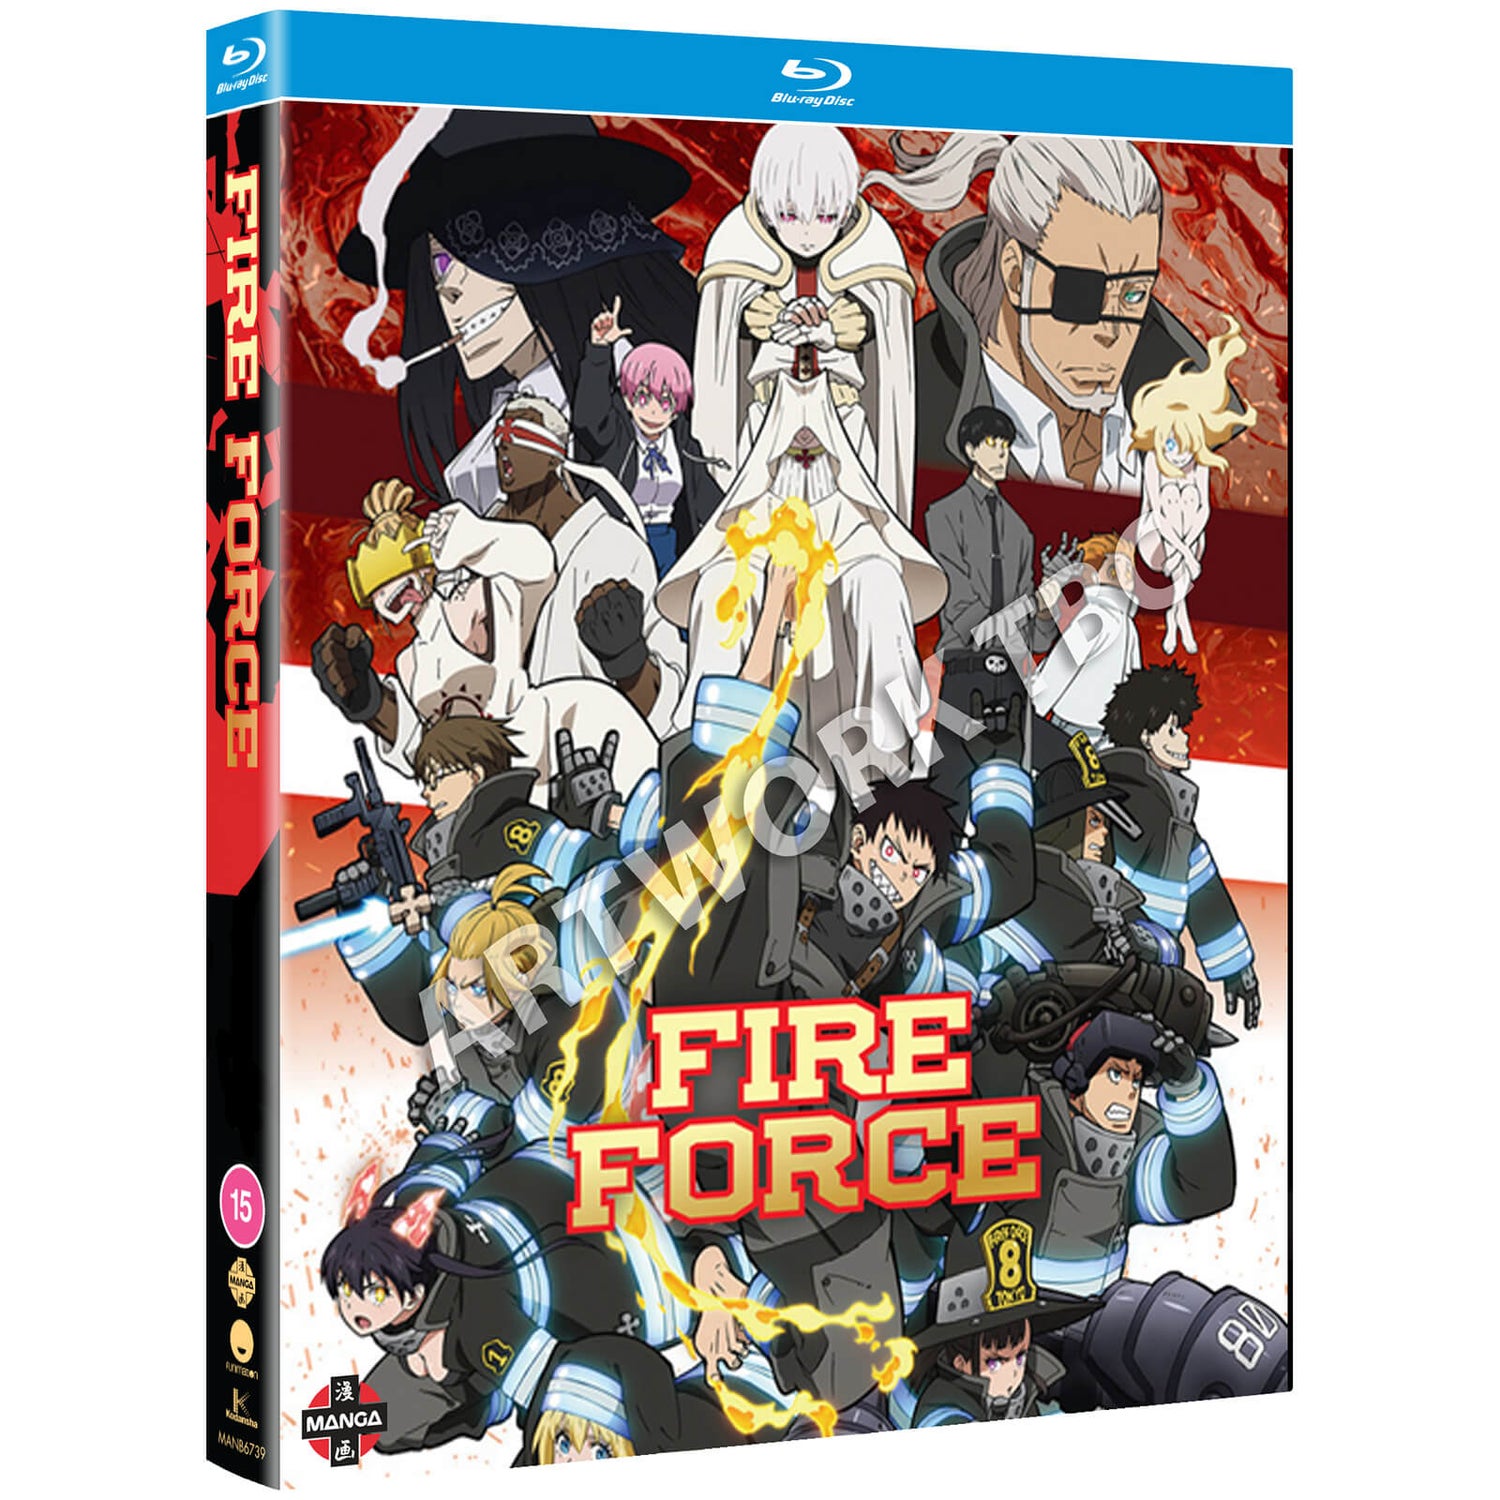 Fire Force Season 2 Part 1 - Blu-ray/DVD Combo + Digital Copy